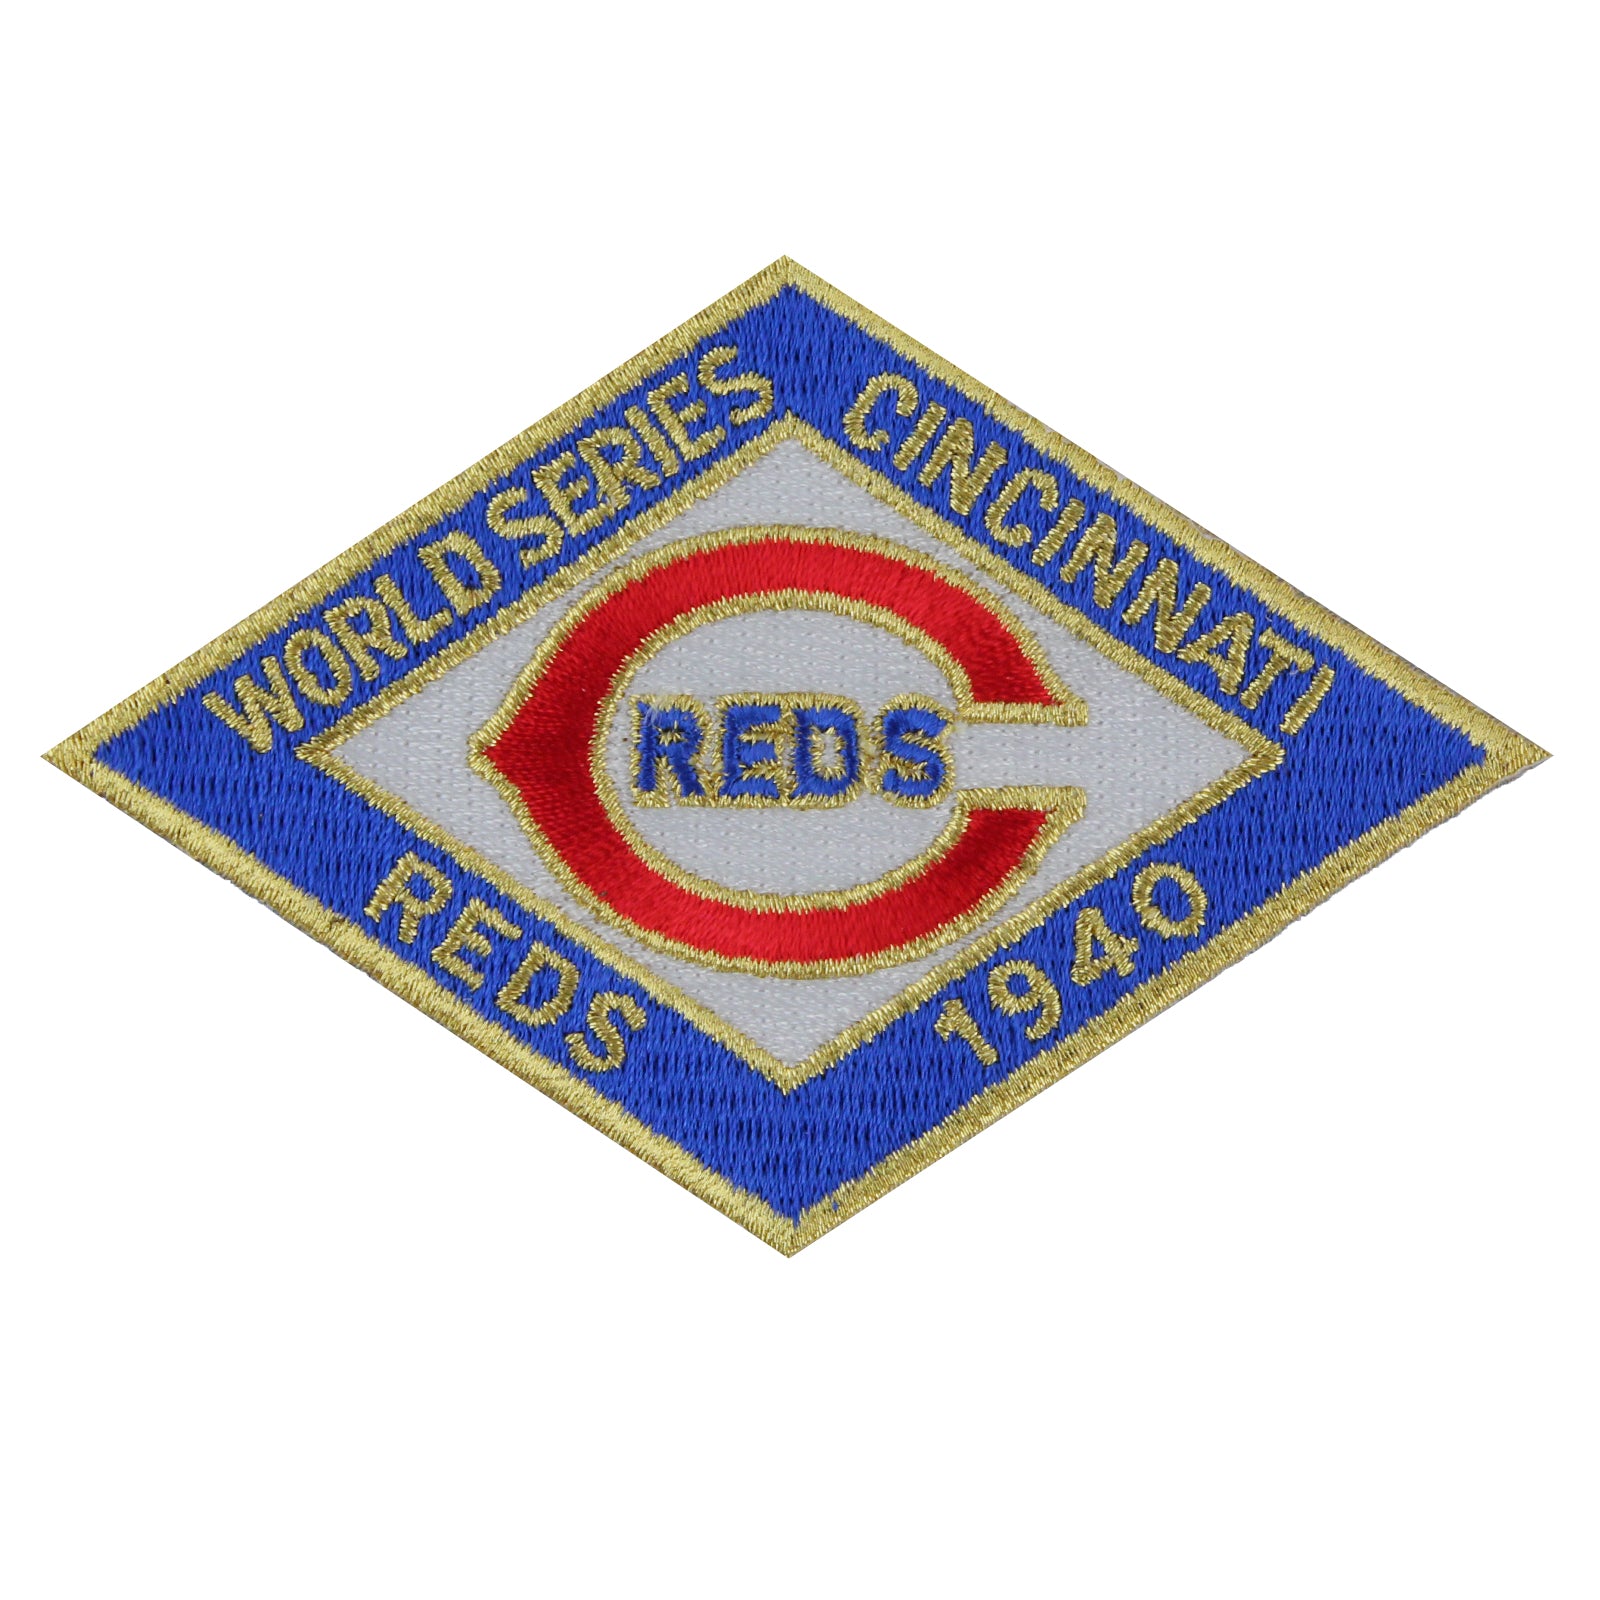 Cincinnati Reds Lilo & Stitch Jersey Baseball Shirt White Custom